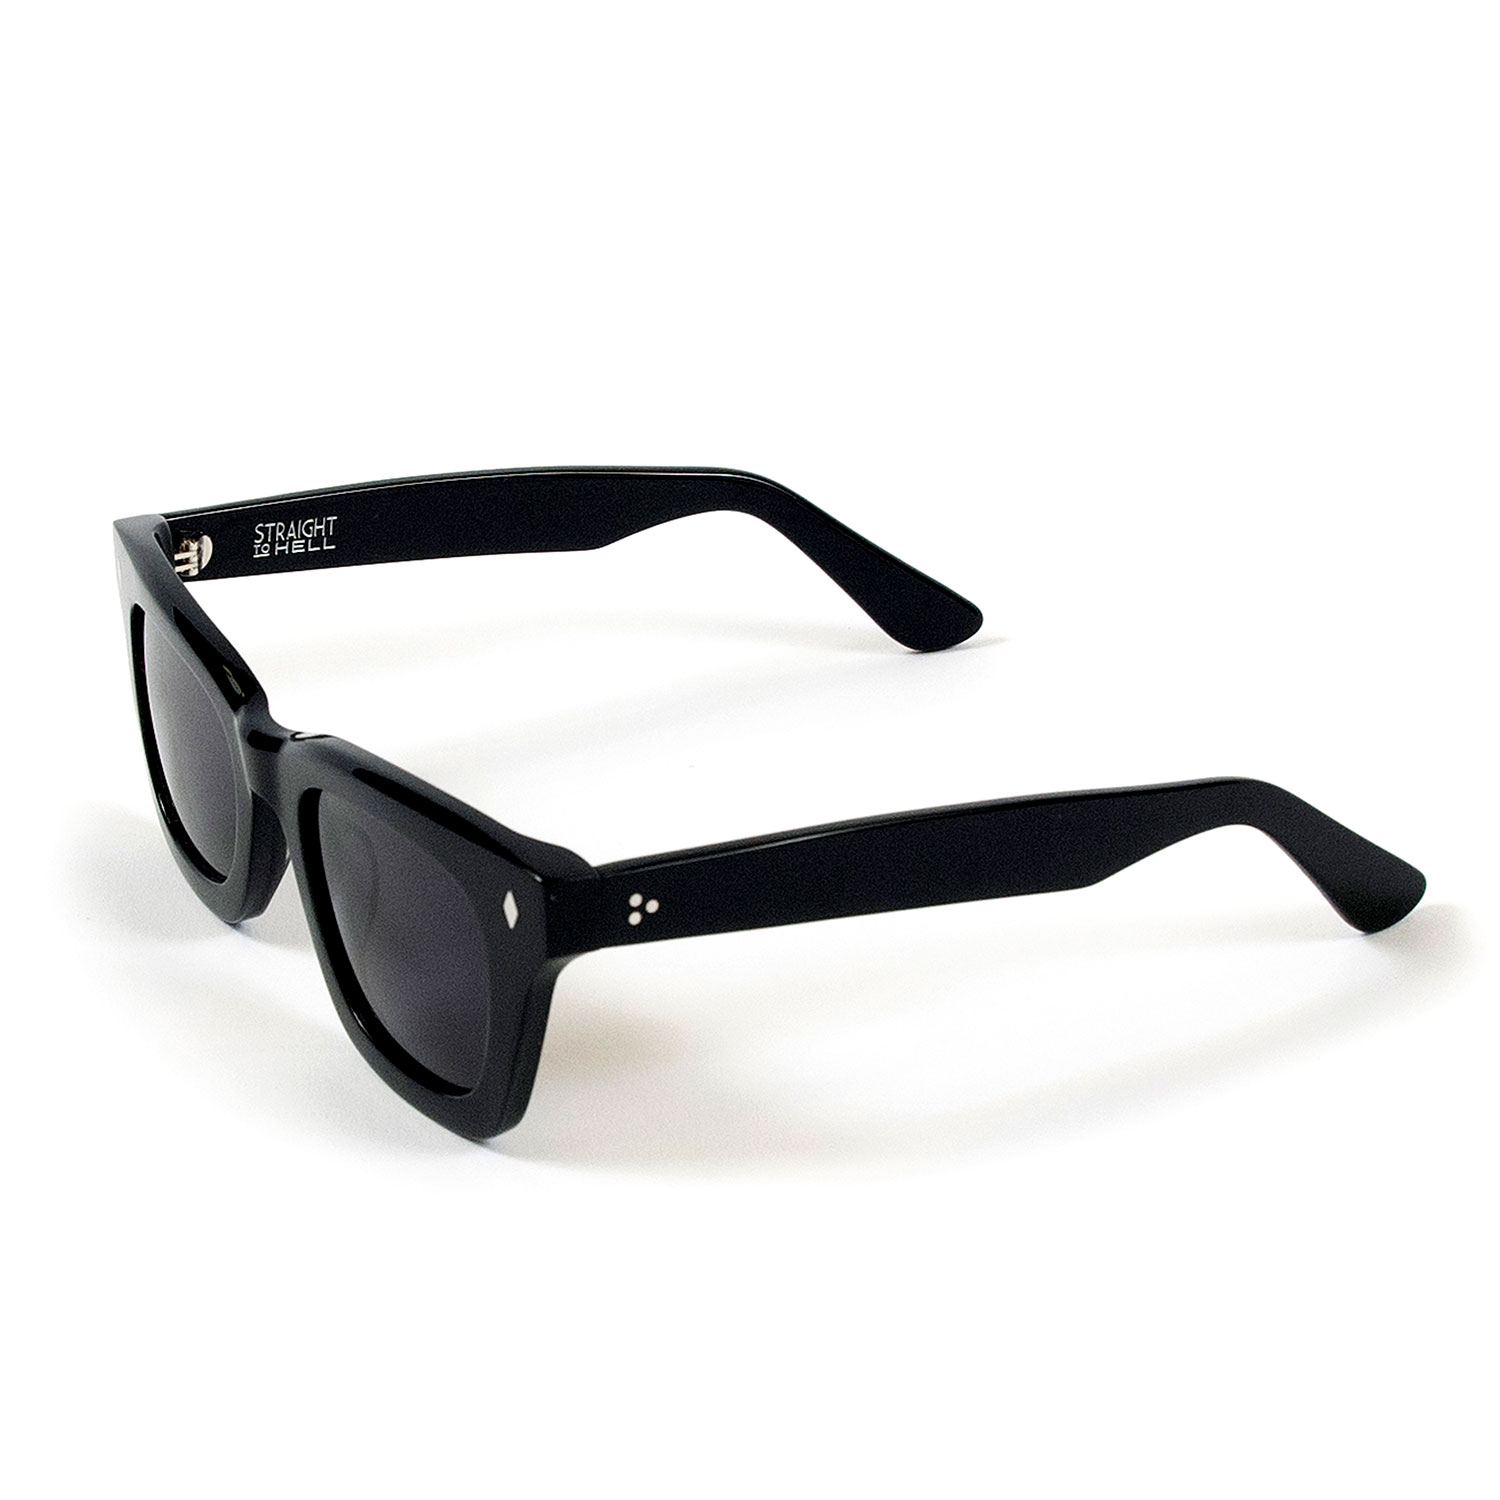 Falcon - Straight Sunglasses To Black Hell | Apparel